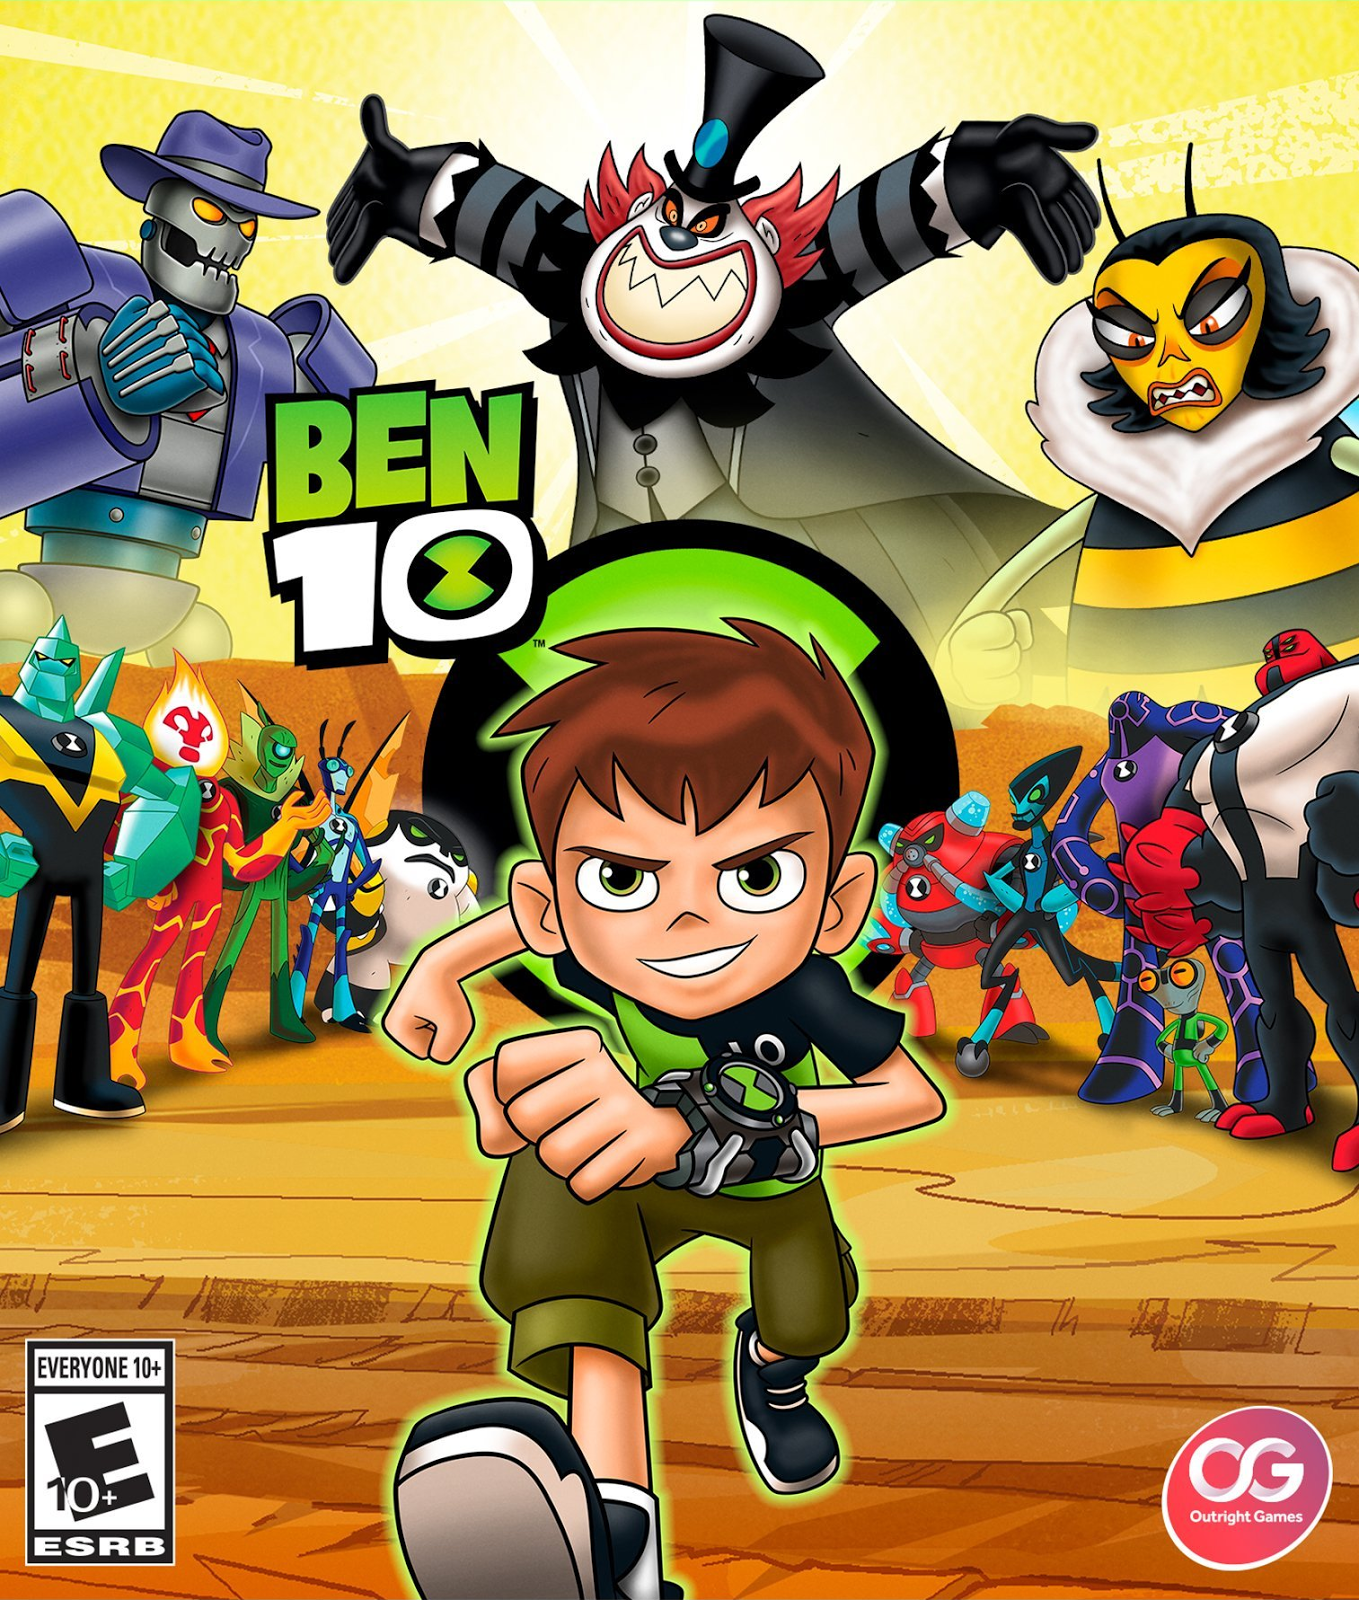 Jogos do Ben 10 - Quem é o Ben 10